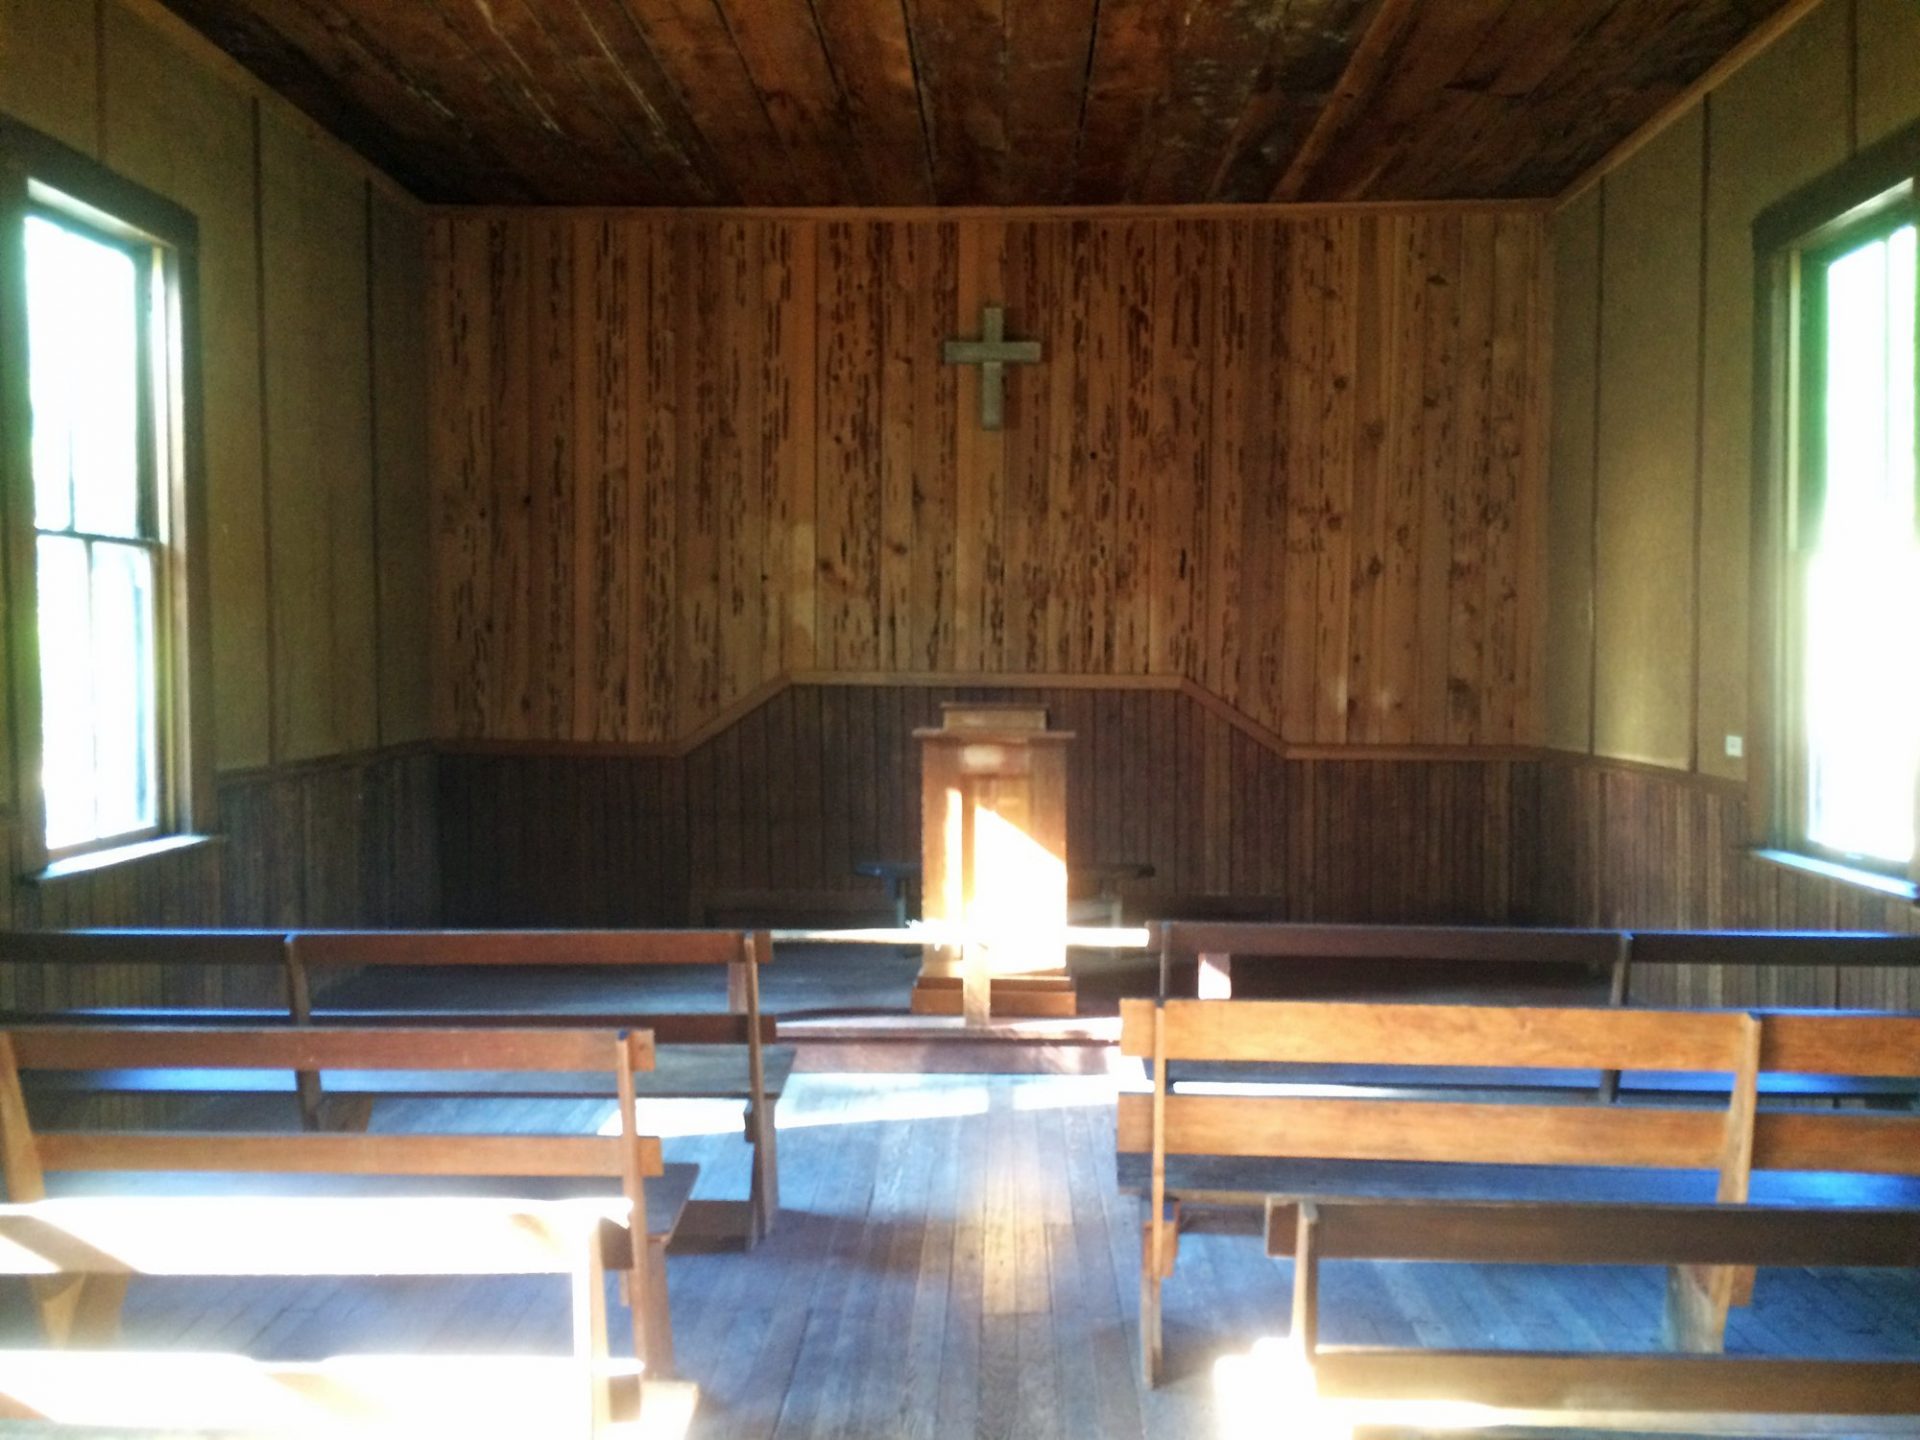 Inside the church at Golden, Oregon